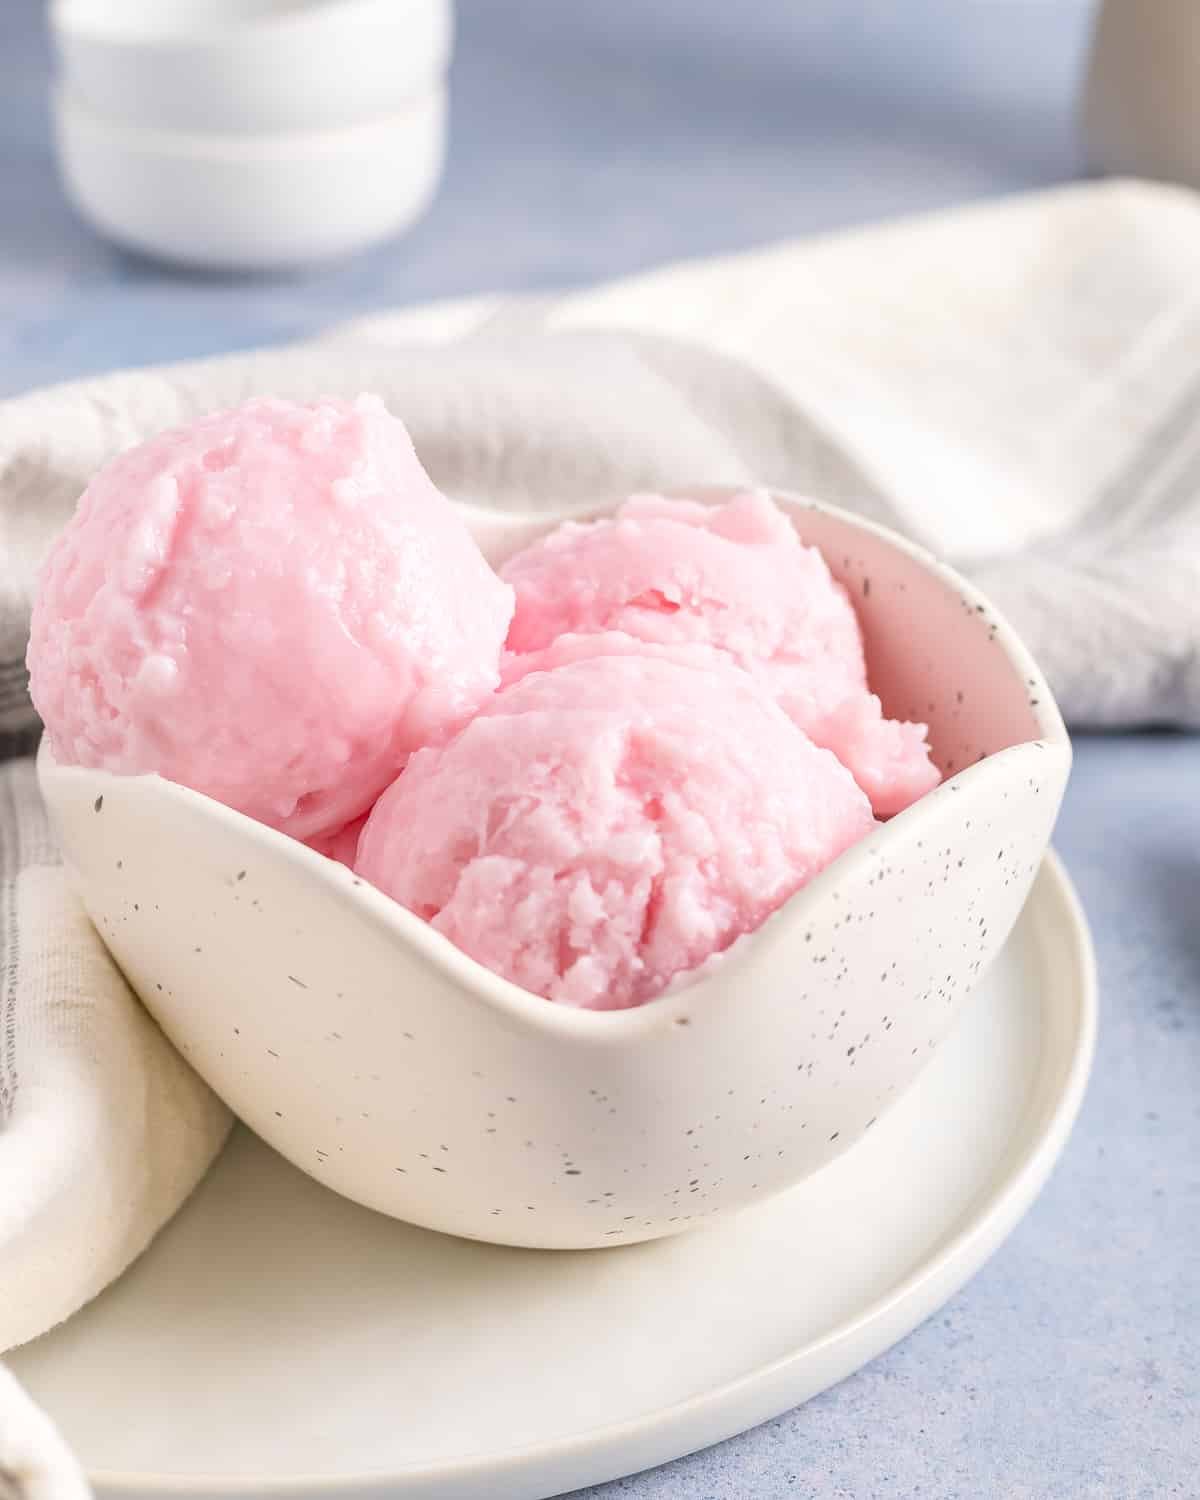 Frozen Yogurt served in a white bowl